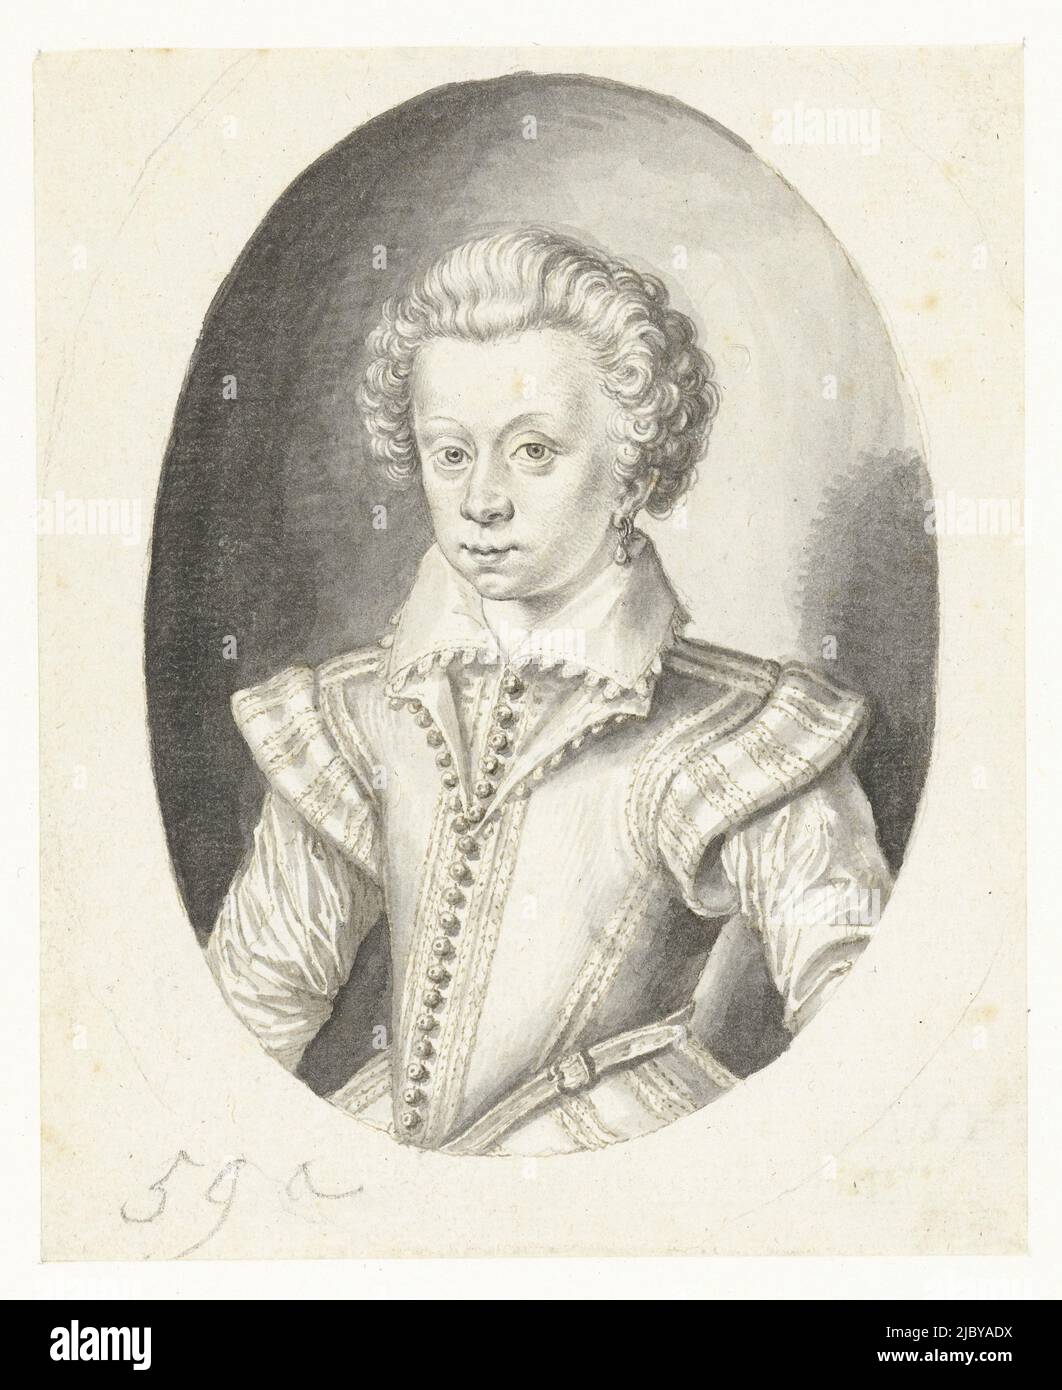 Portrait of Henri de Bourbon, Prince de Condé, Jacob de Gheyn (II), 1594 - 1599, Design for a print., draughtsman: Jacob de Gheyn (II), 1594 - 1599, paper, pen, brush, h 94 mm × w 77 mm Stock Photo